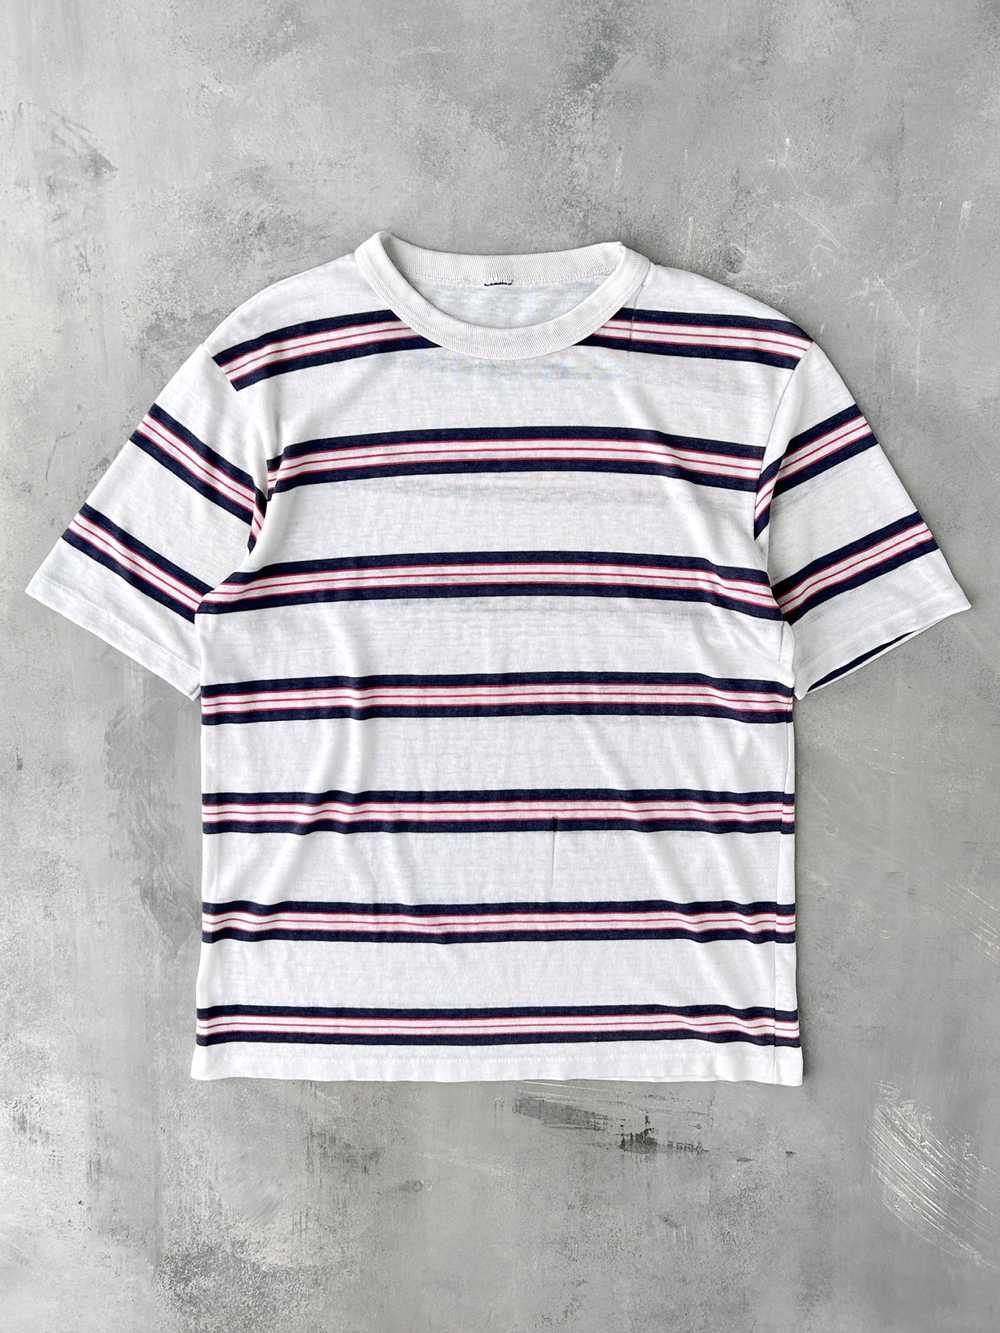 Striped T-Shirt 80's - Medium - image 1